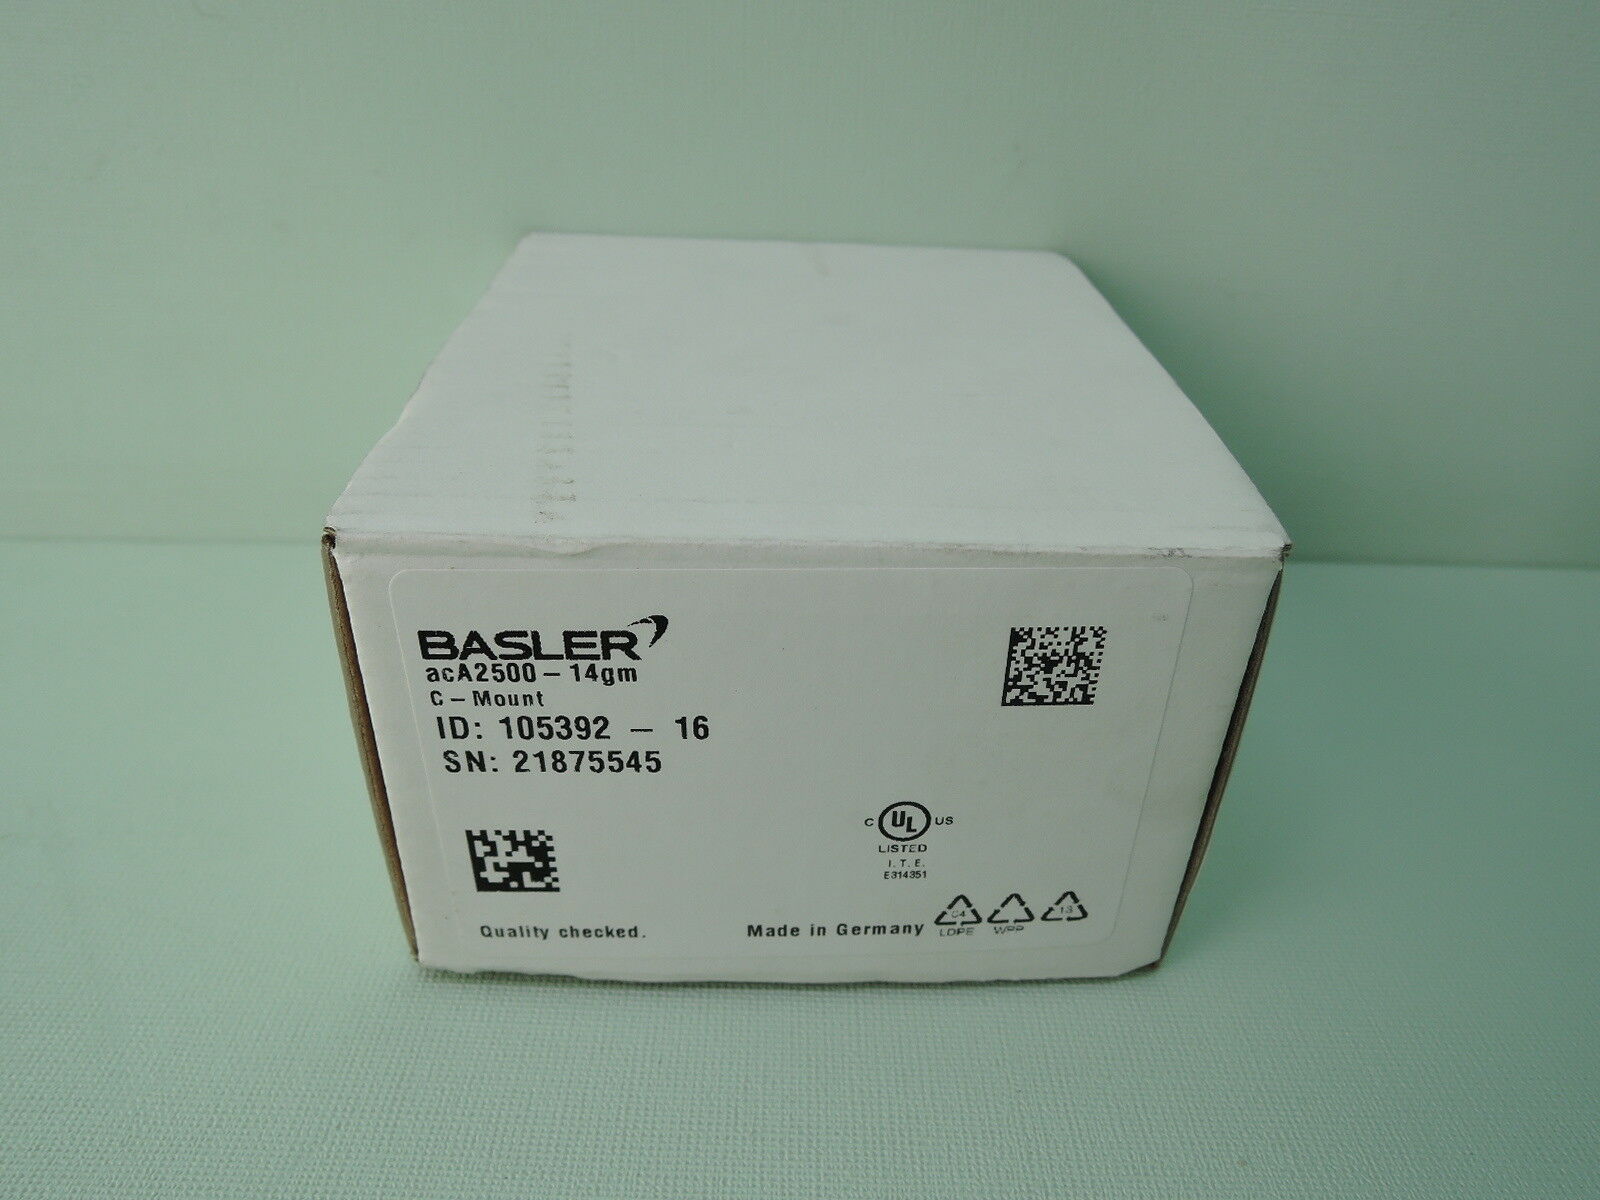 New Basler acA2500-14GM ACE Camera, 14FPS @ 5 MP Resolution, 1/25" Image Circle